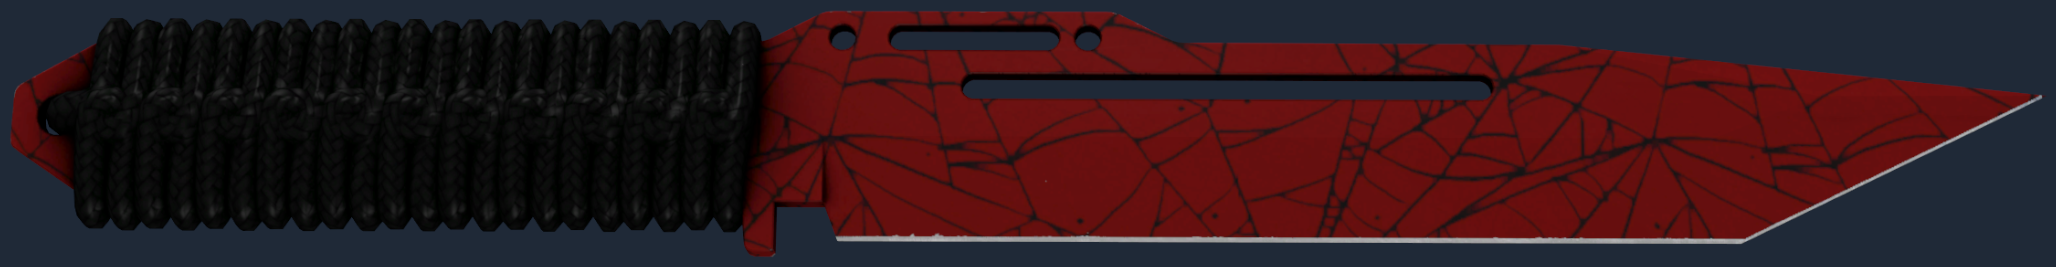 ★ Paracord Knife | Crimson Web Screenshot